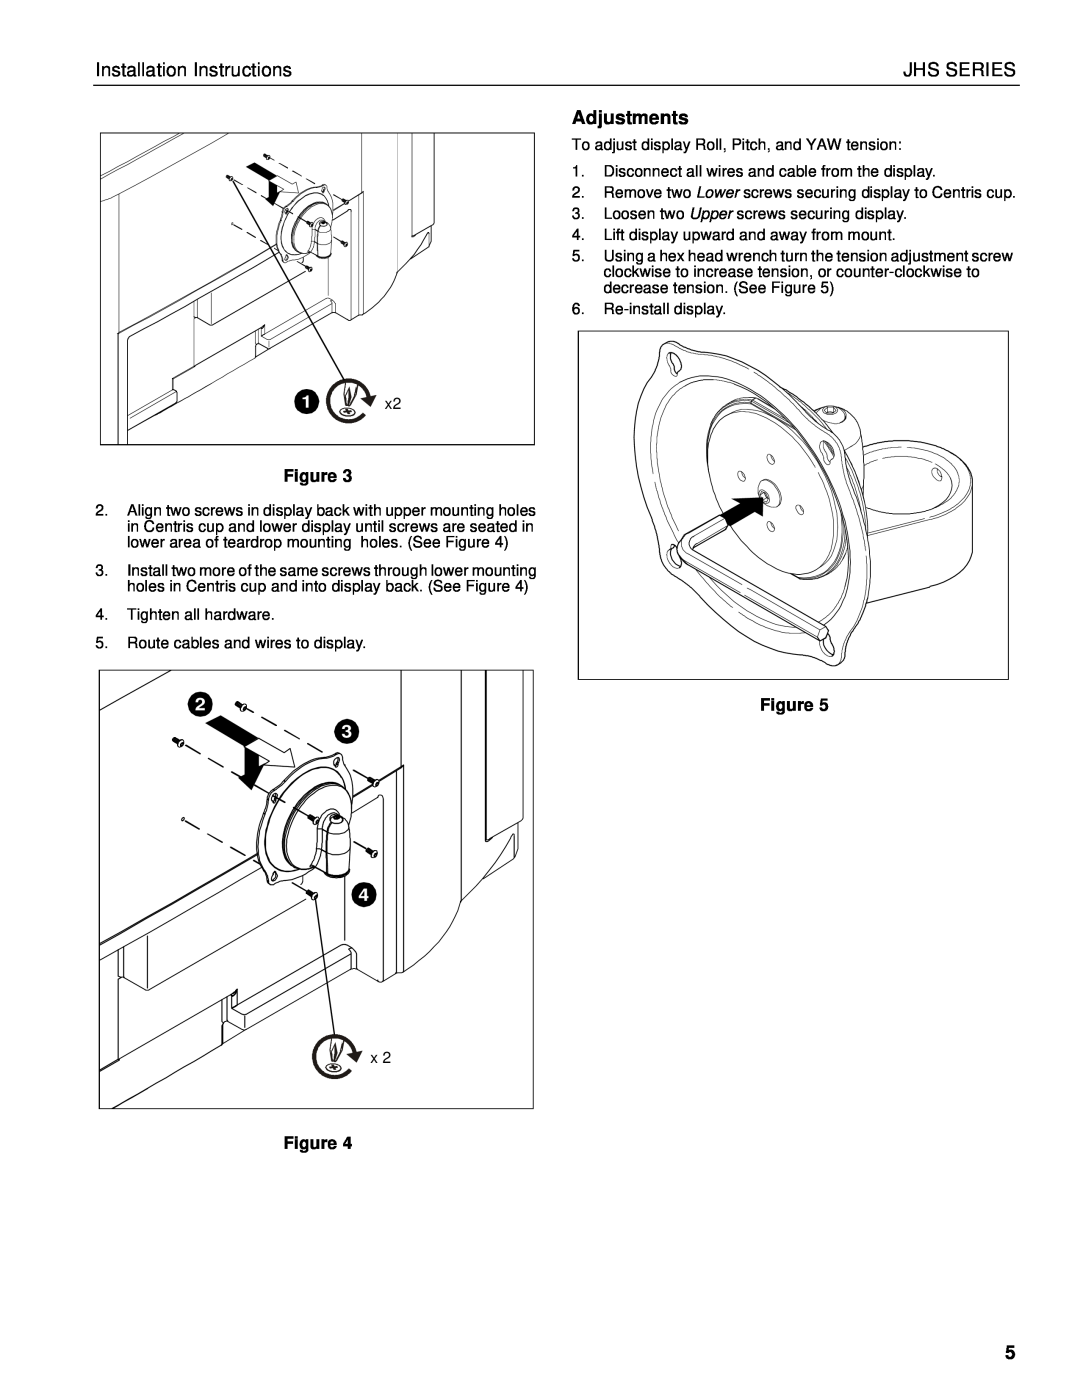 Chief Manufacturing JHS Series installation instructions Adjustments, Installation Instructions, Jhs Series 